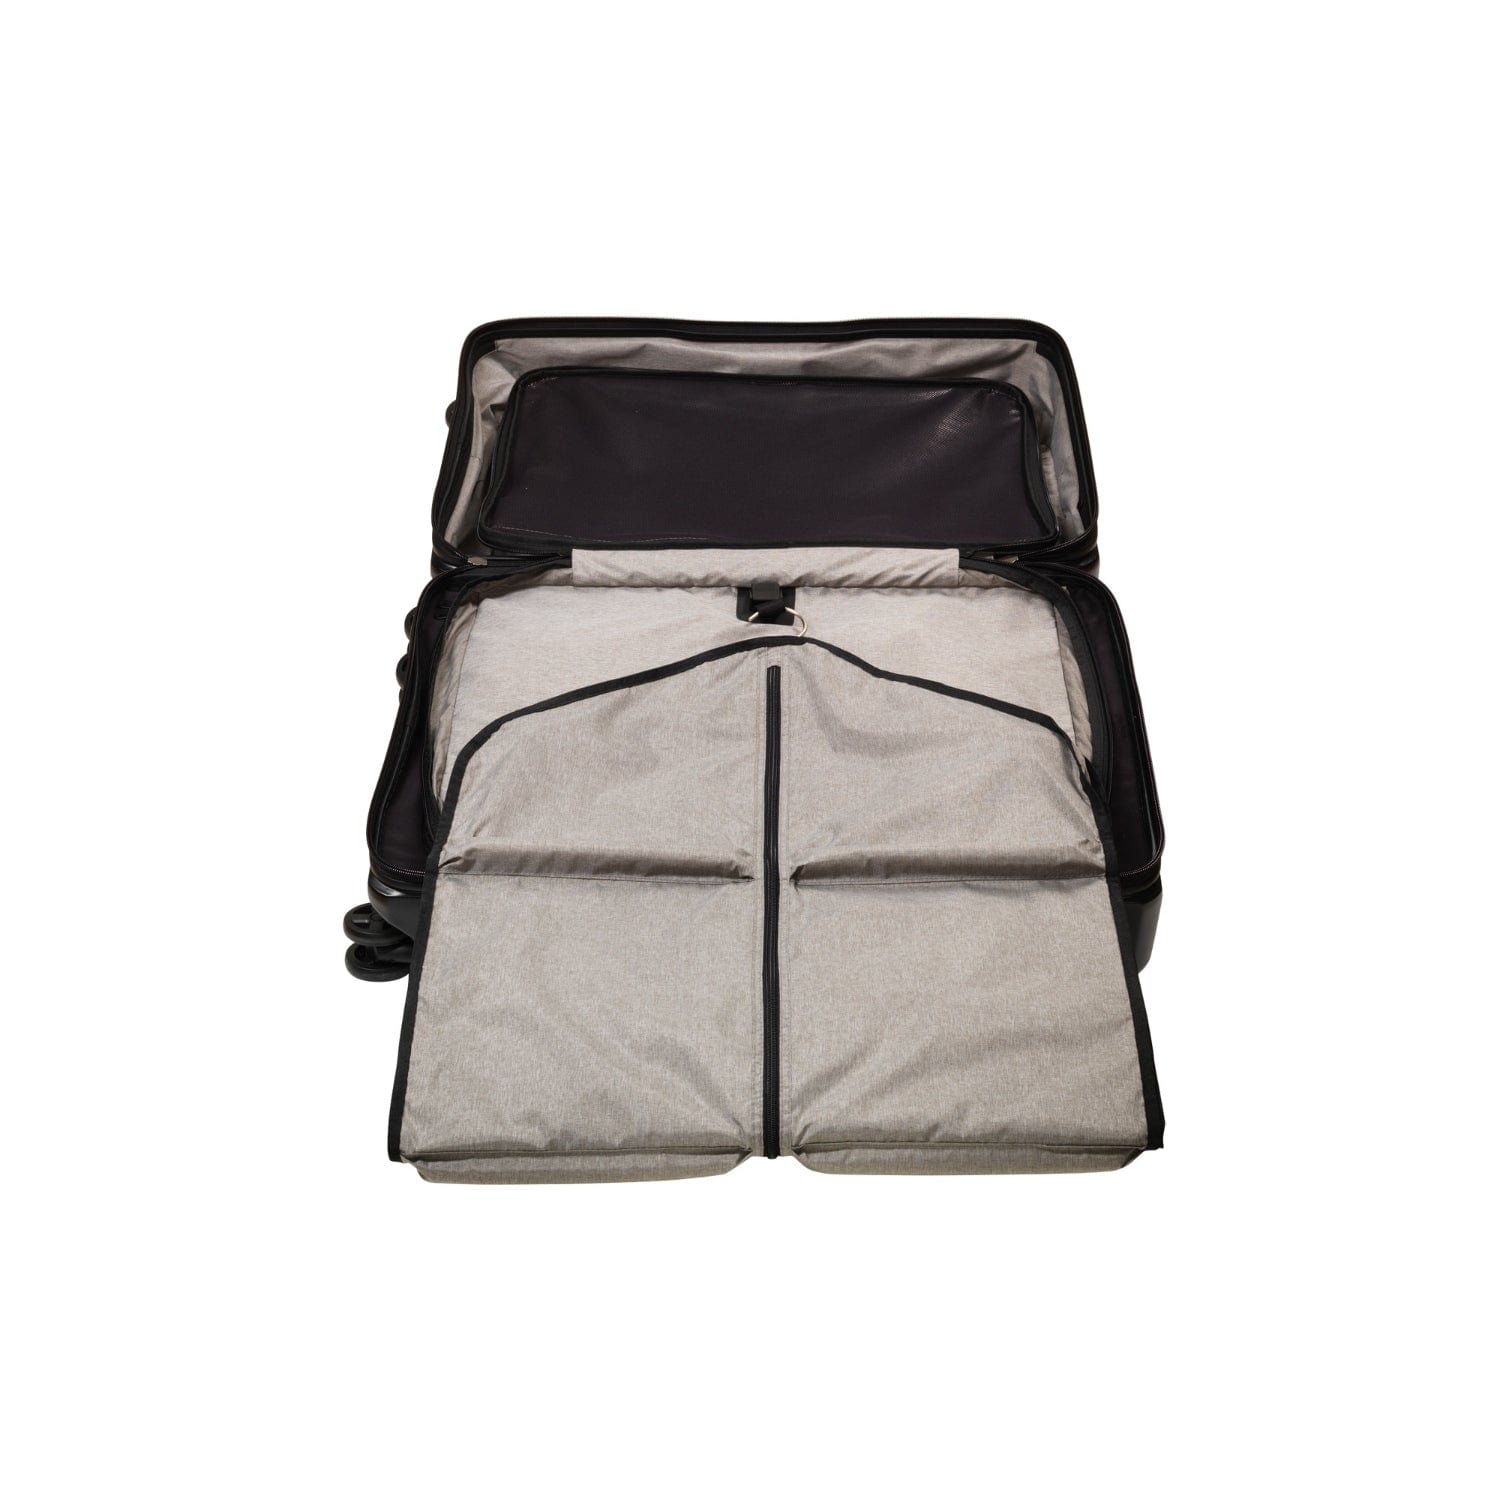 Victorinox Lexicon 68cm Medium Hardcase 4 Double Wheel Check-In Luggage Trolley Case Black - 602105